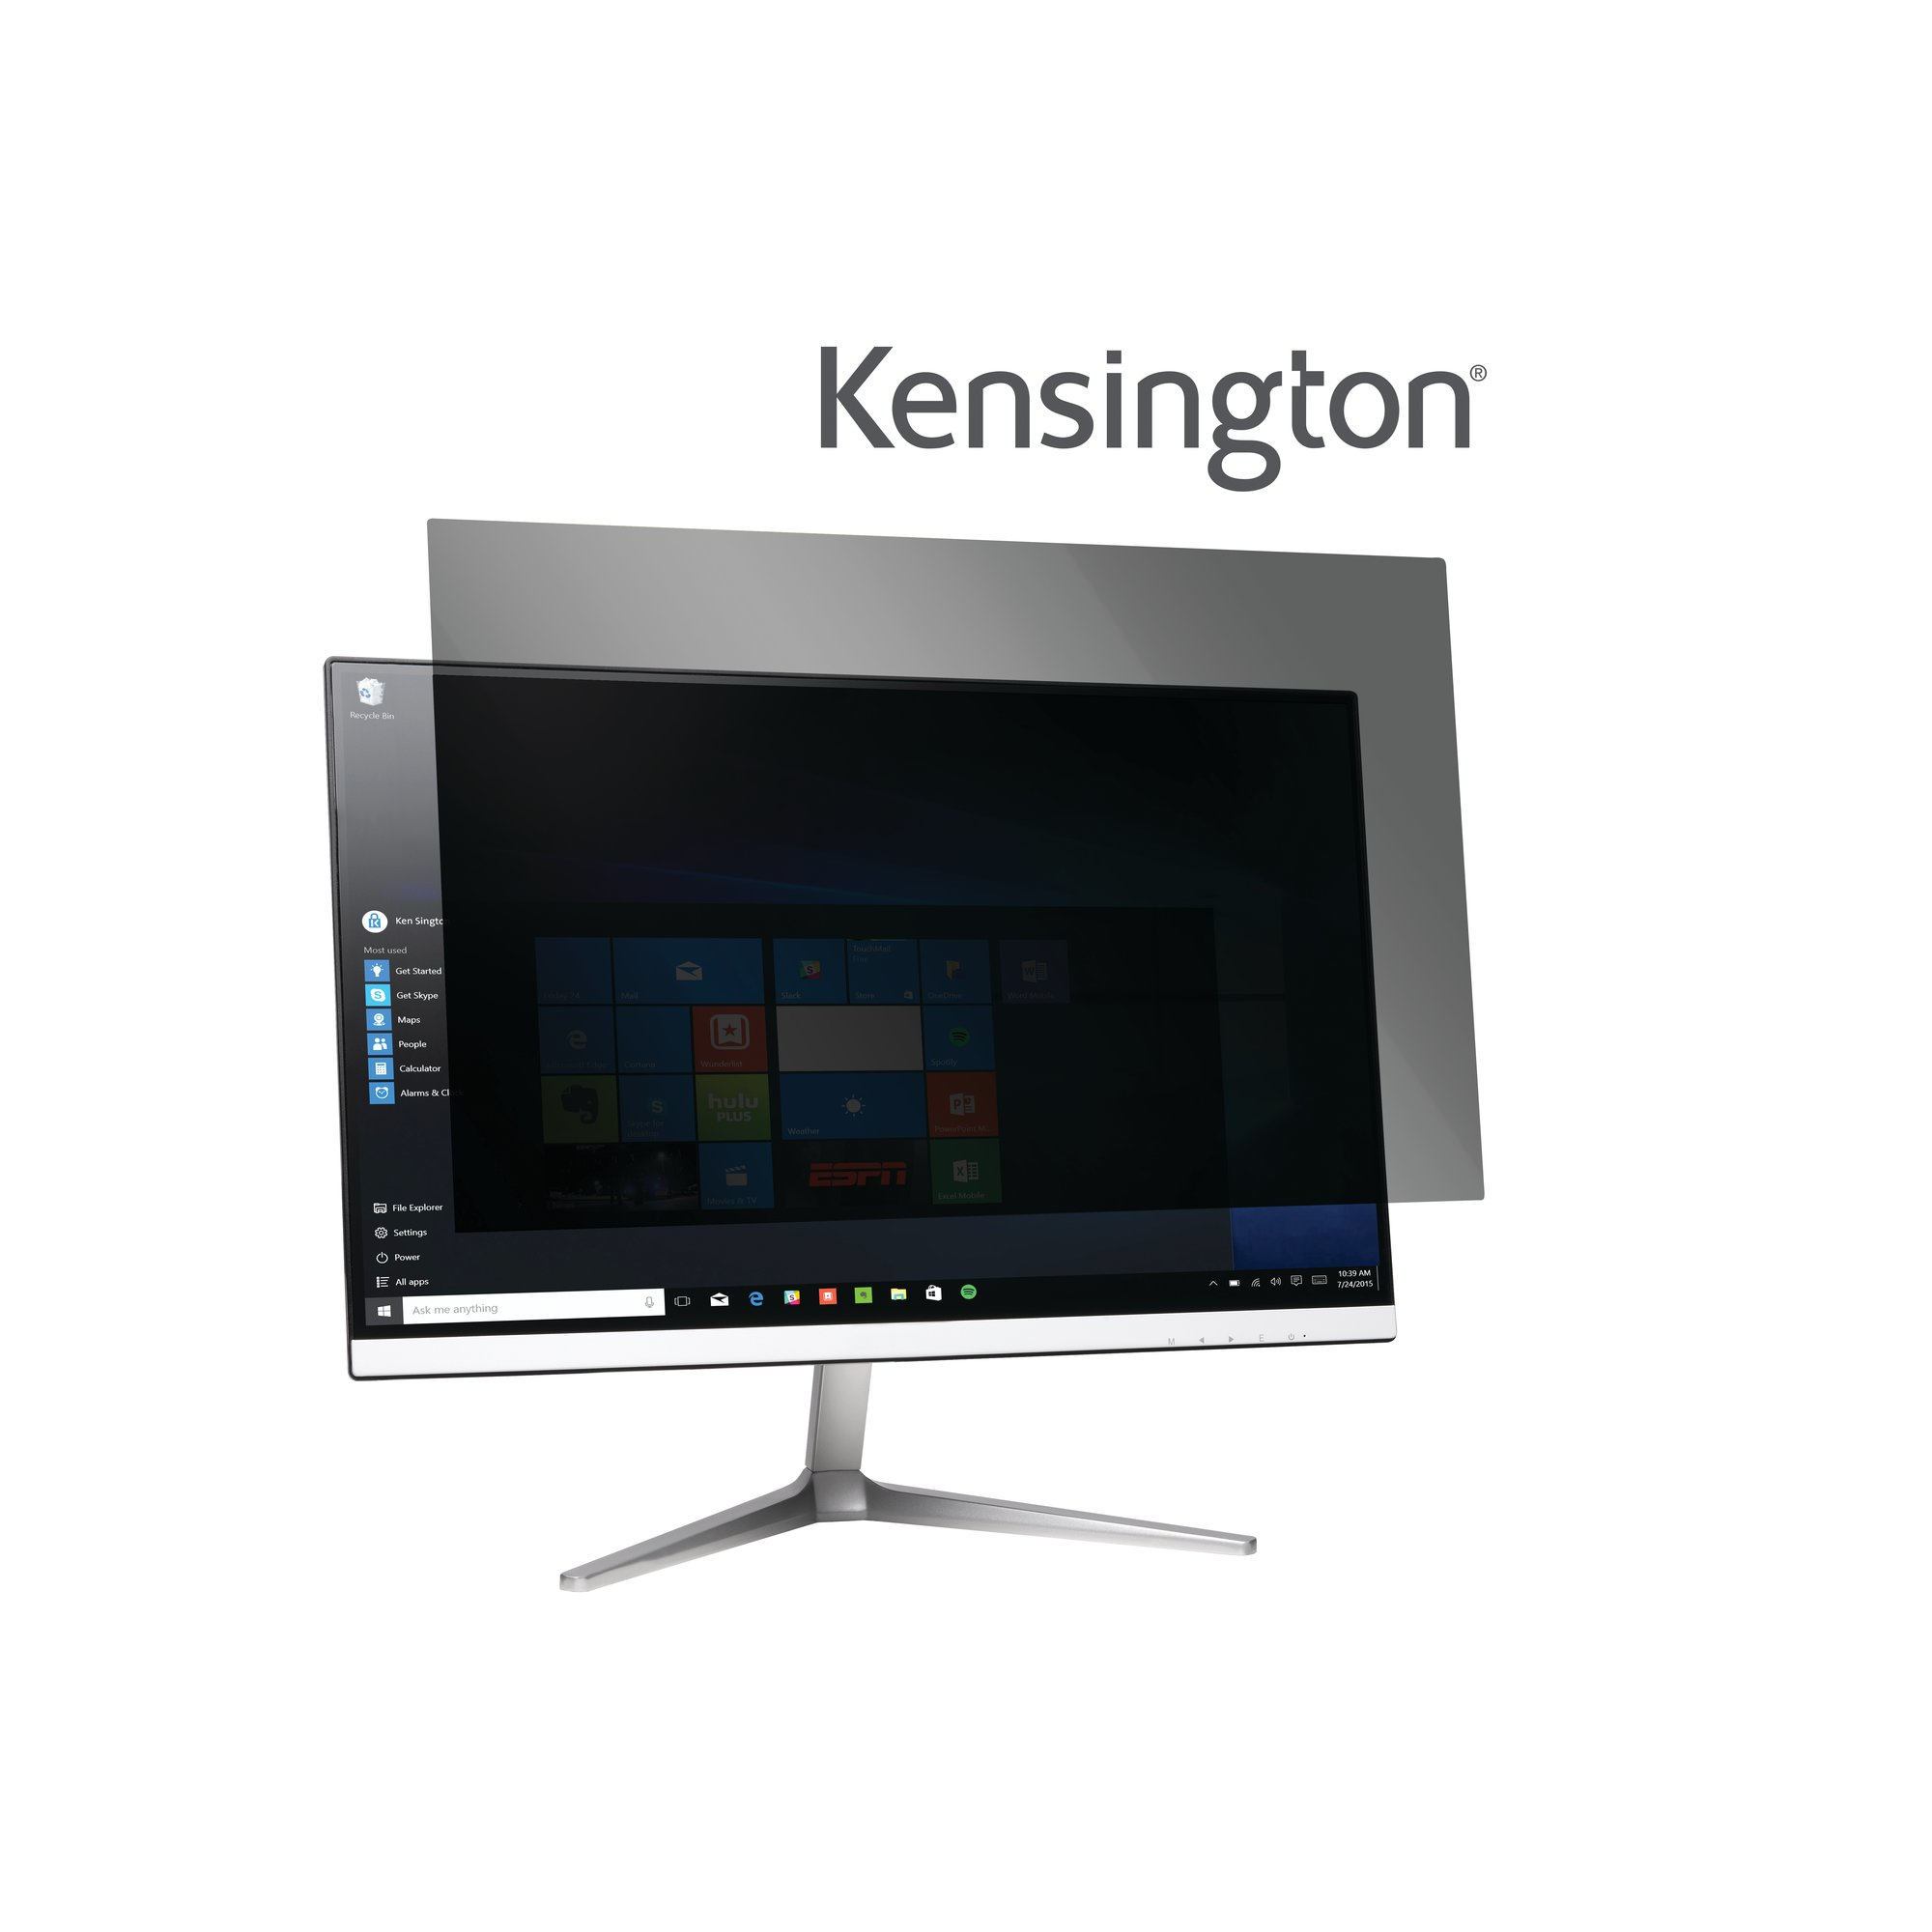 Kensington Blickschutzfilter für Bildschirme - 2-Wege - entfernbar - 86.4 cm wide (34 Zoll Breitbild)